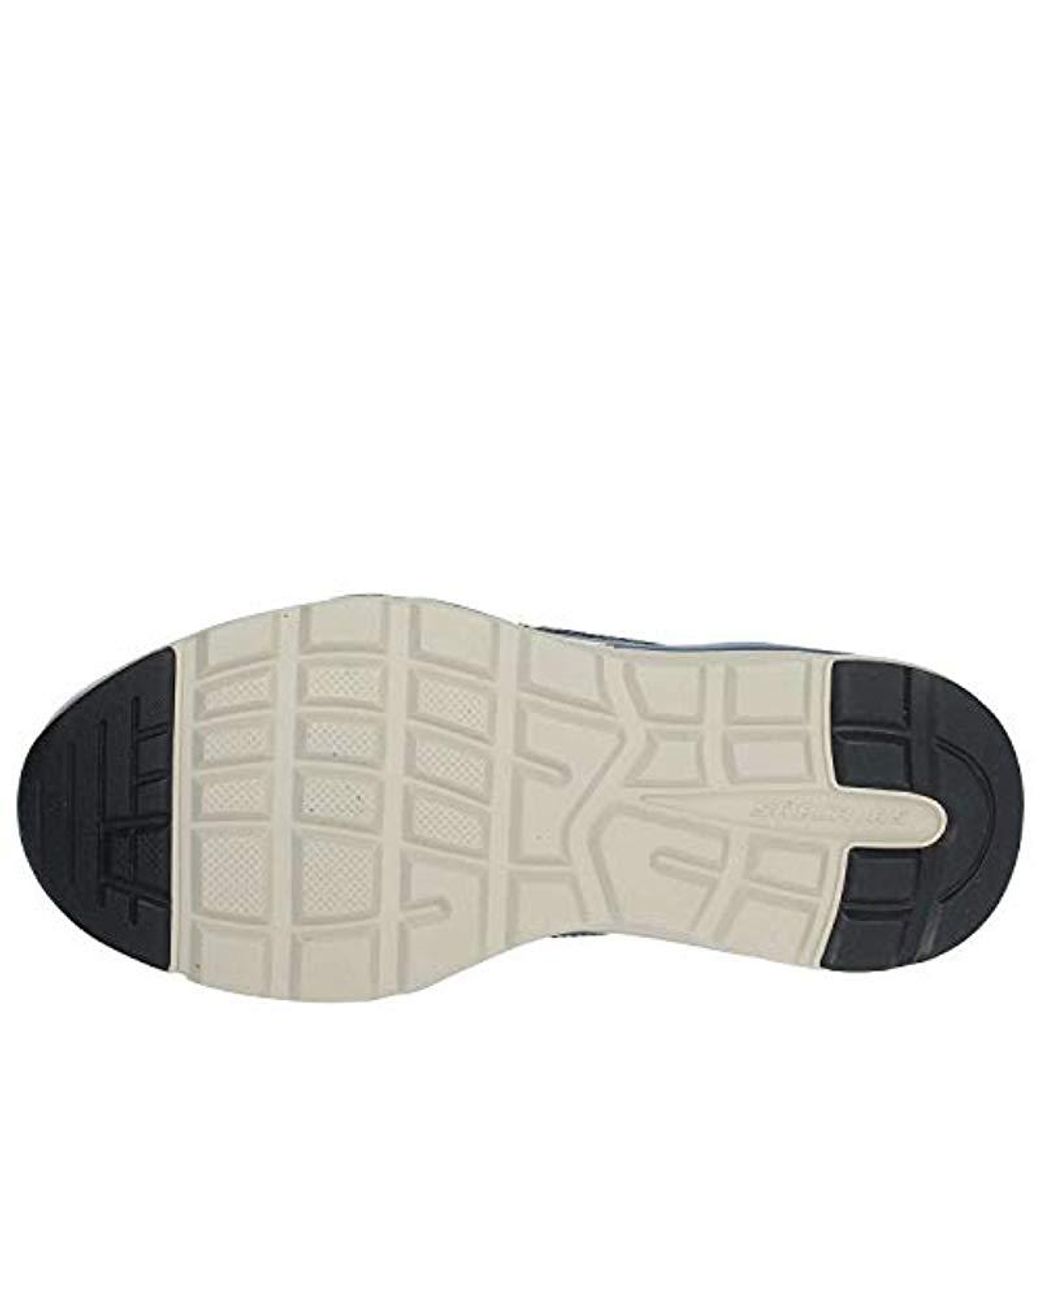 Zapatos Skechers Dama 2019 Xl Online Selection, 62% OFF |  thefloortimecenter.com